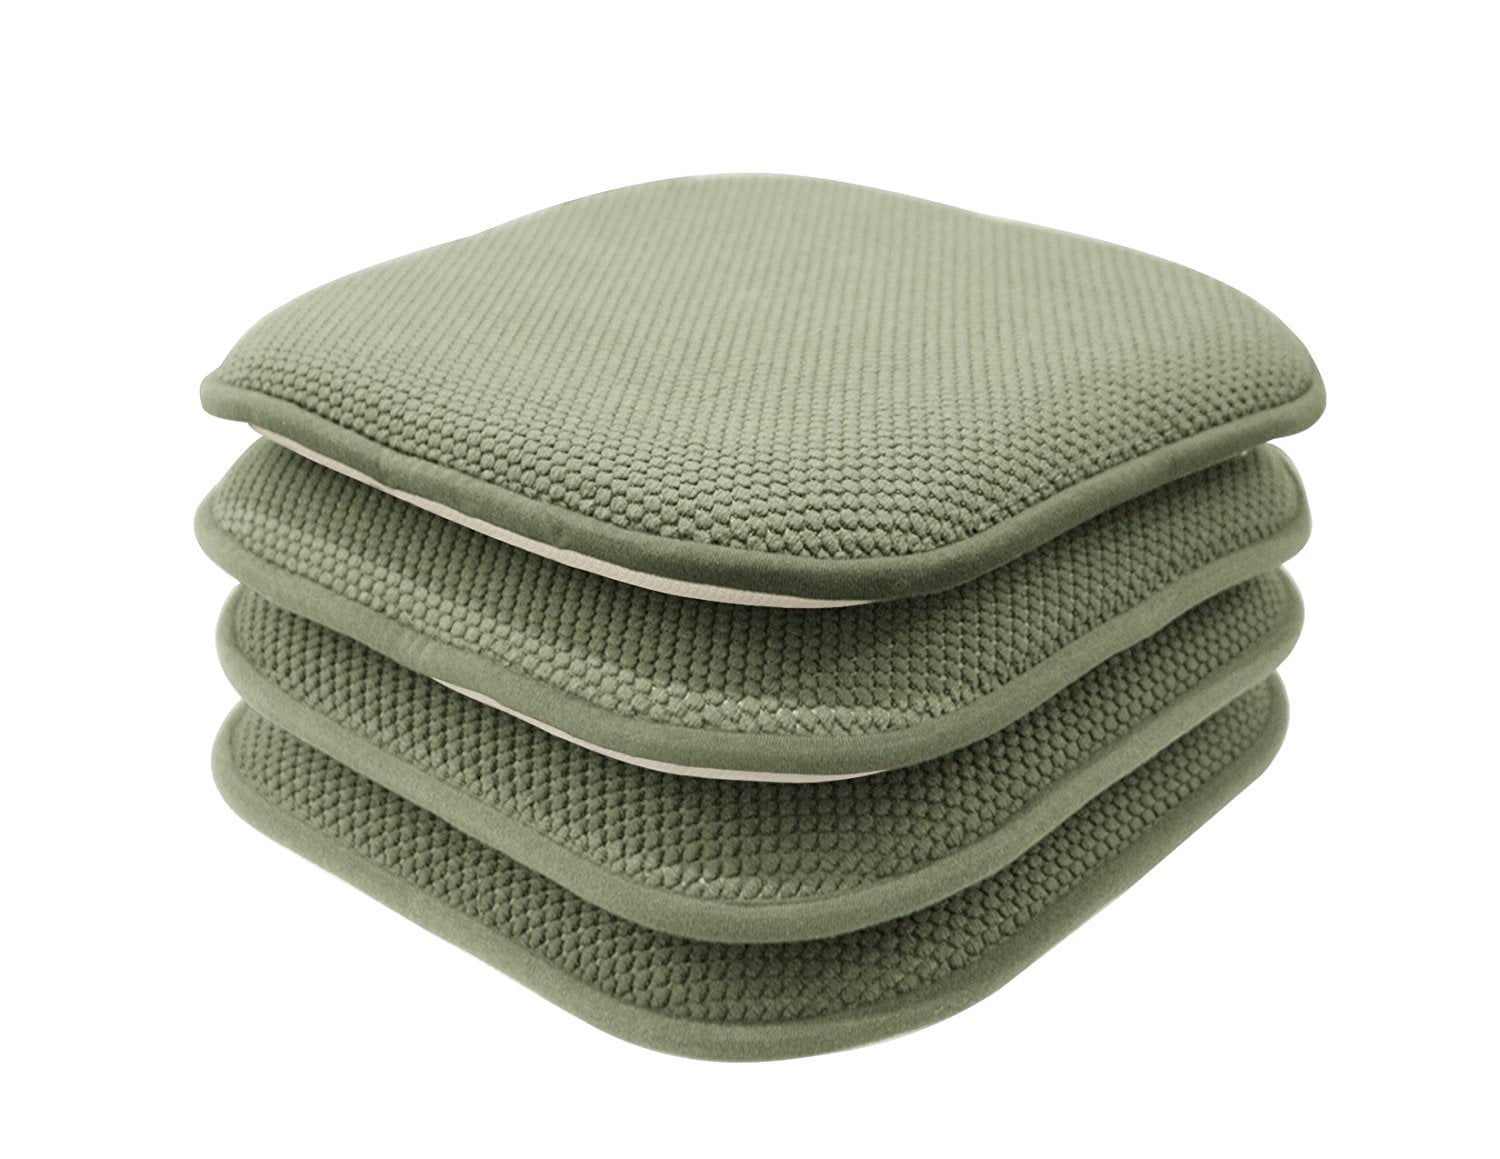 High quality Memory Foam Non-slip Cushion Pad Inventories